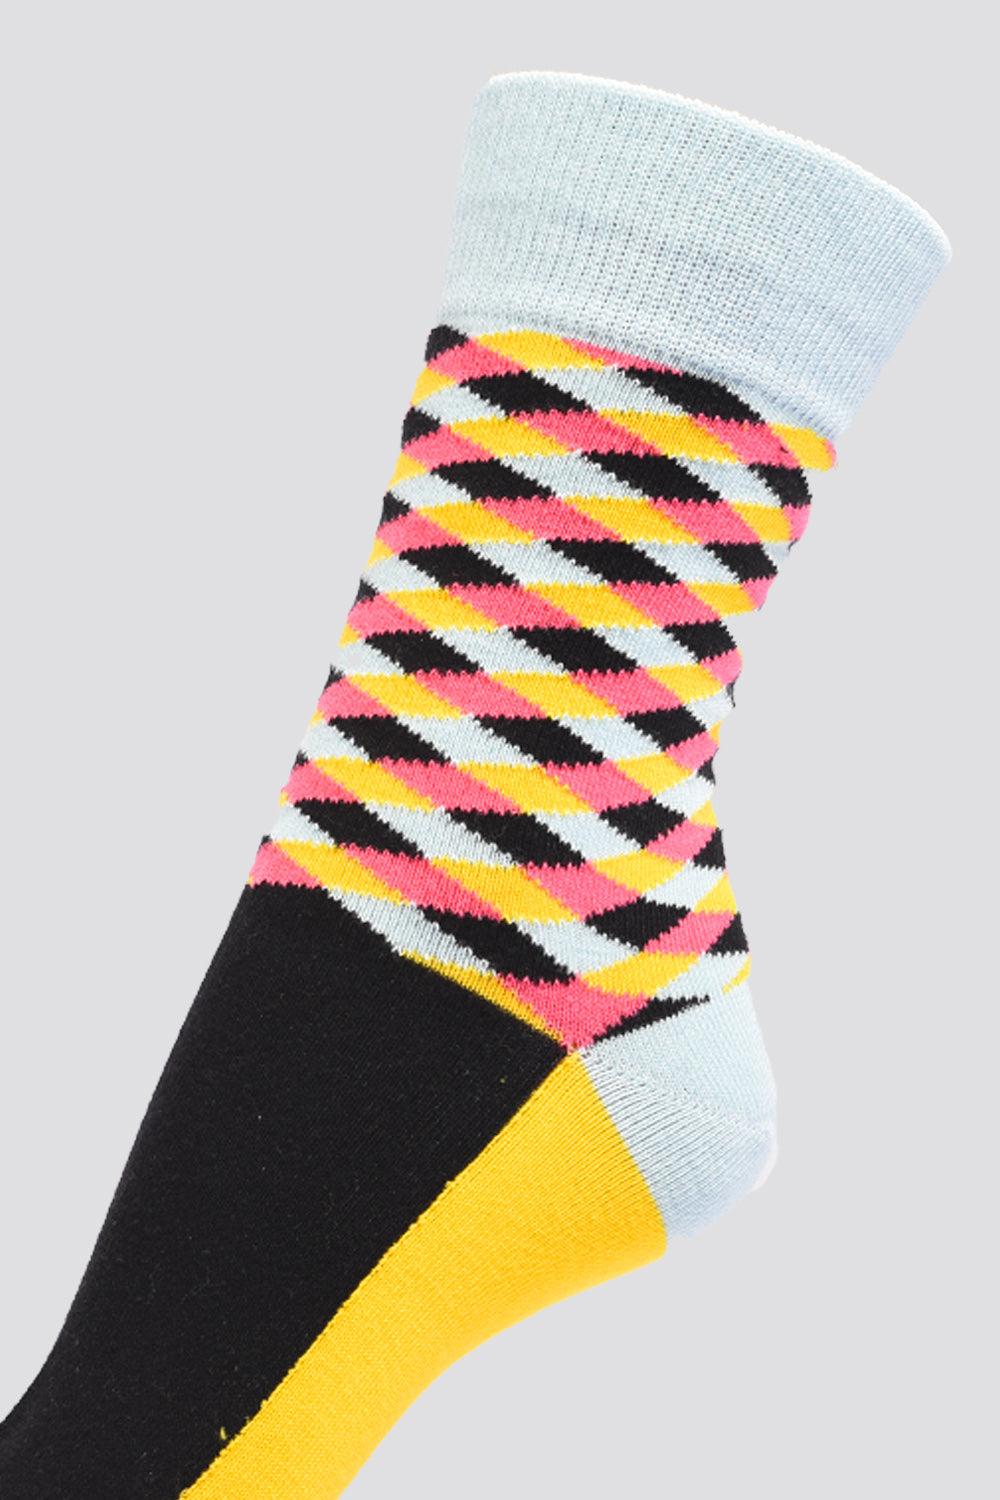 SIMPLE O.D.S - זוג גרביים צבעונים 36-40 - MASHBIR//365